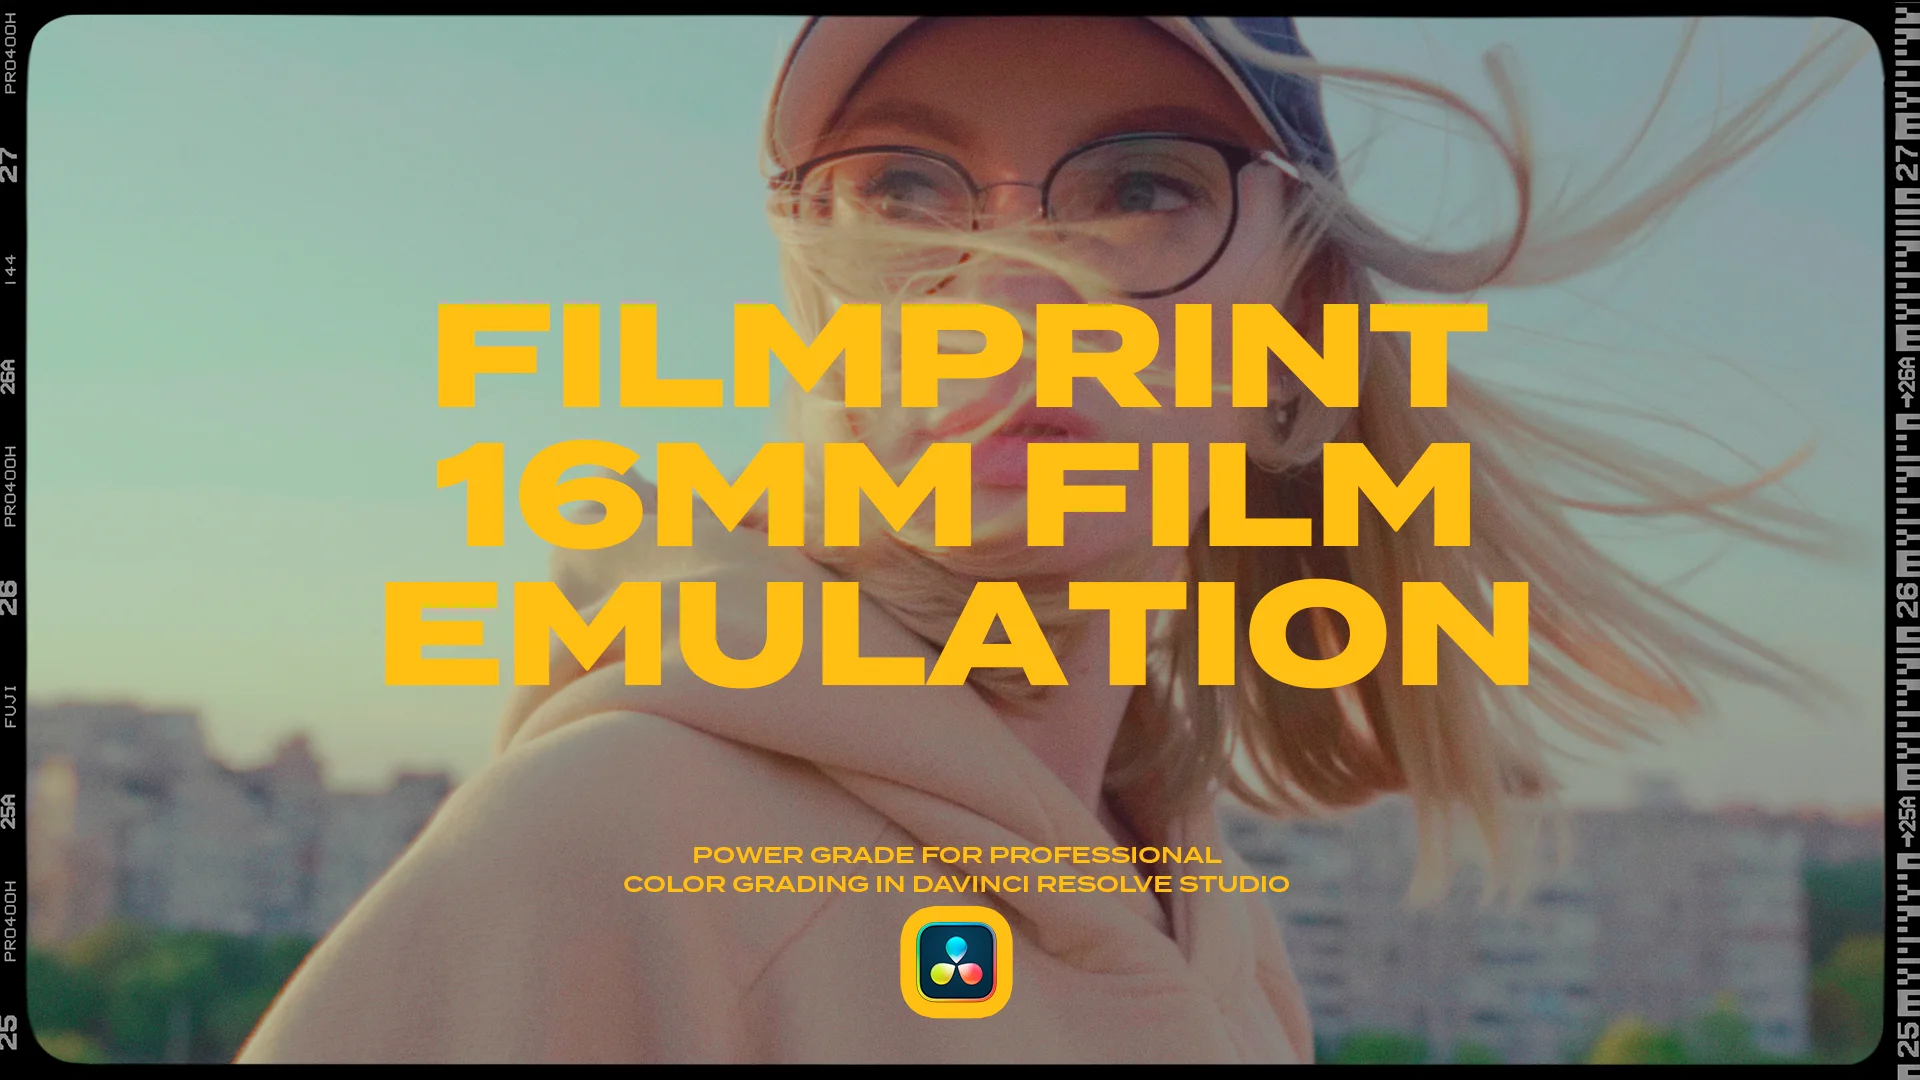 FilmPrint 16mm FILM EMULATION Power Grade for Professional Color Grading in  DaVinci Resolve Studio on Vimeo